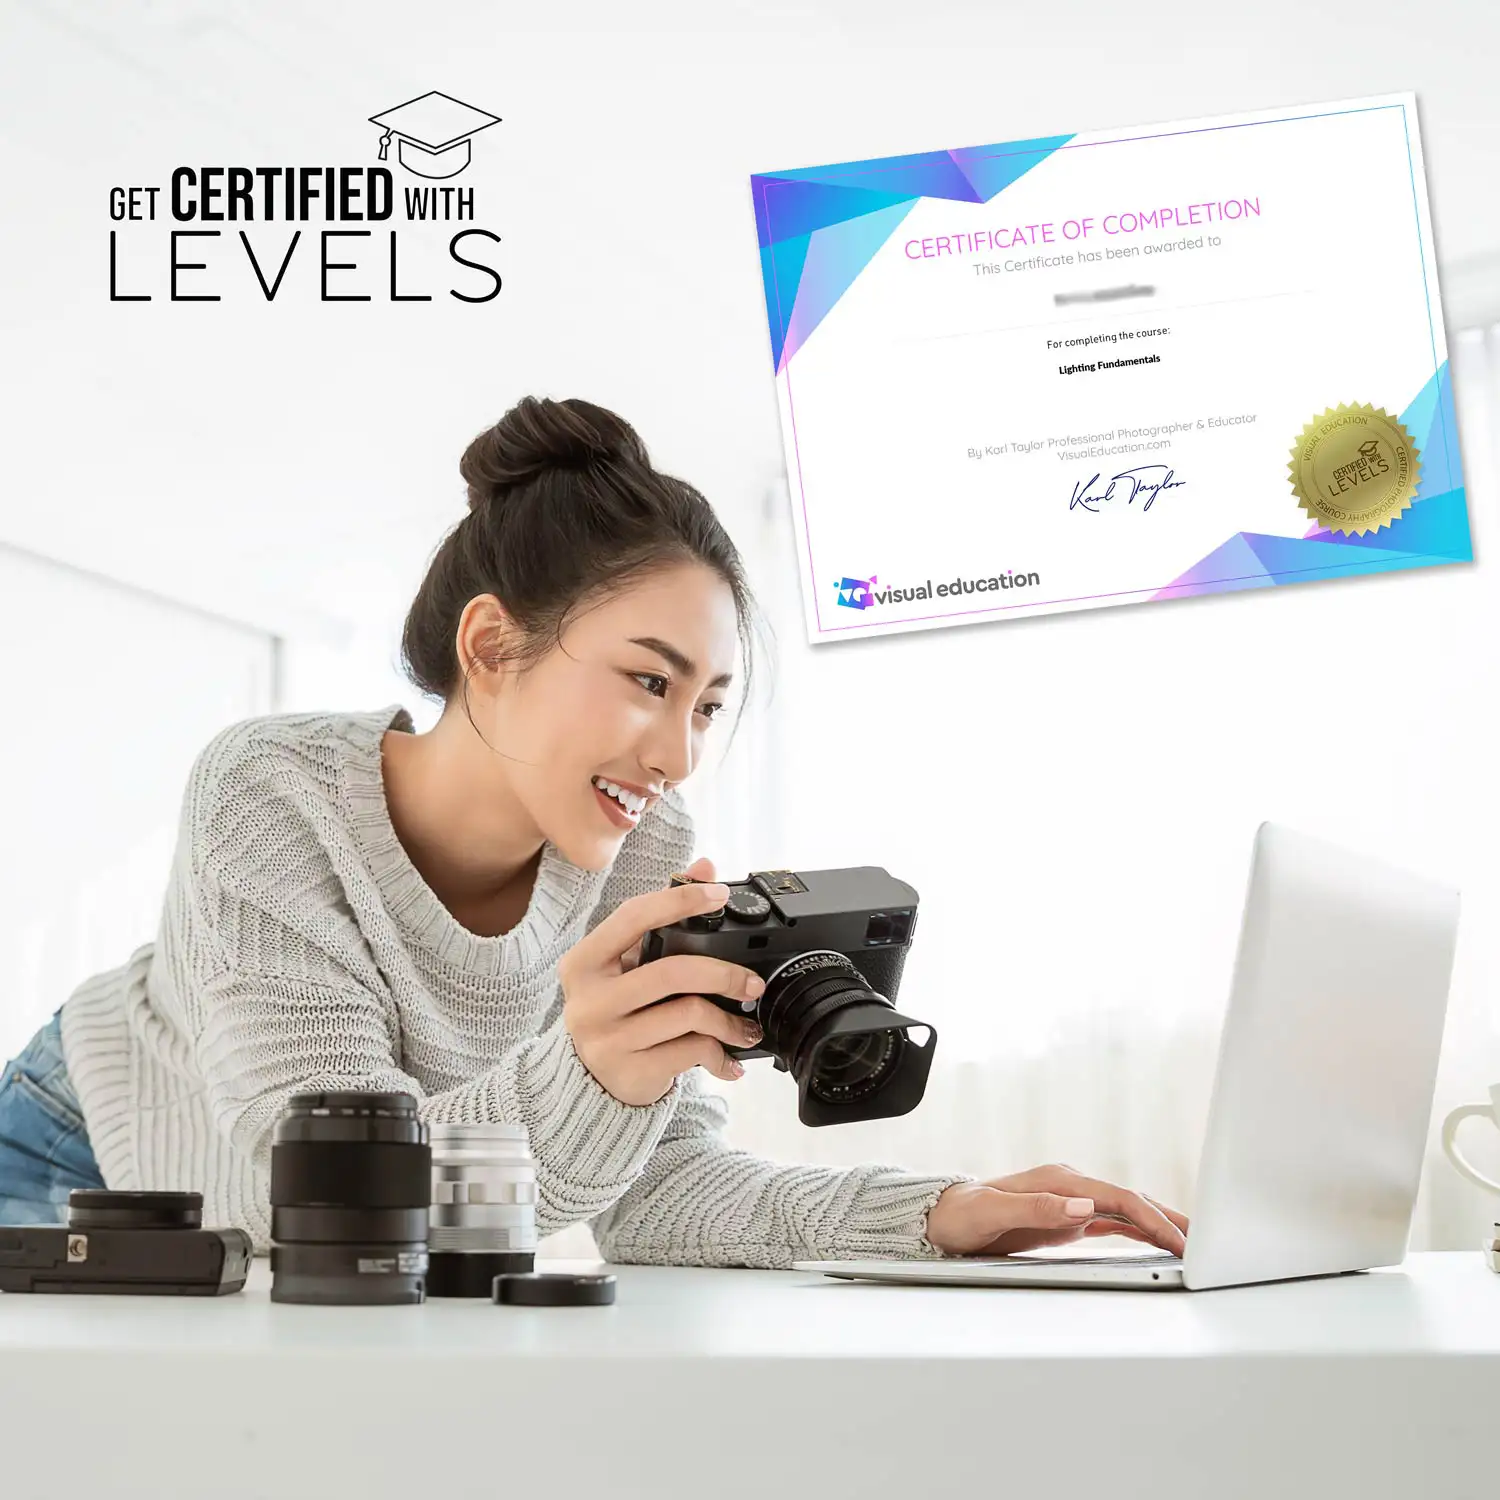 Levels certificates